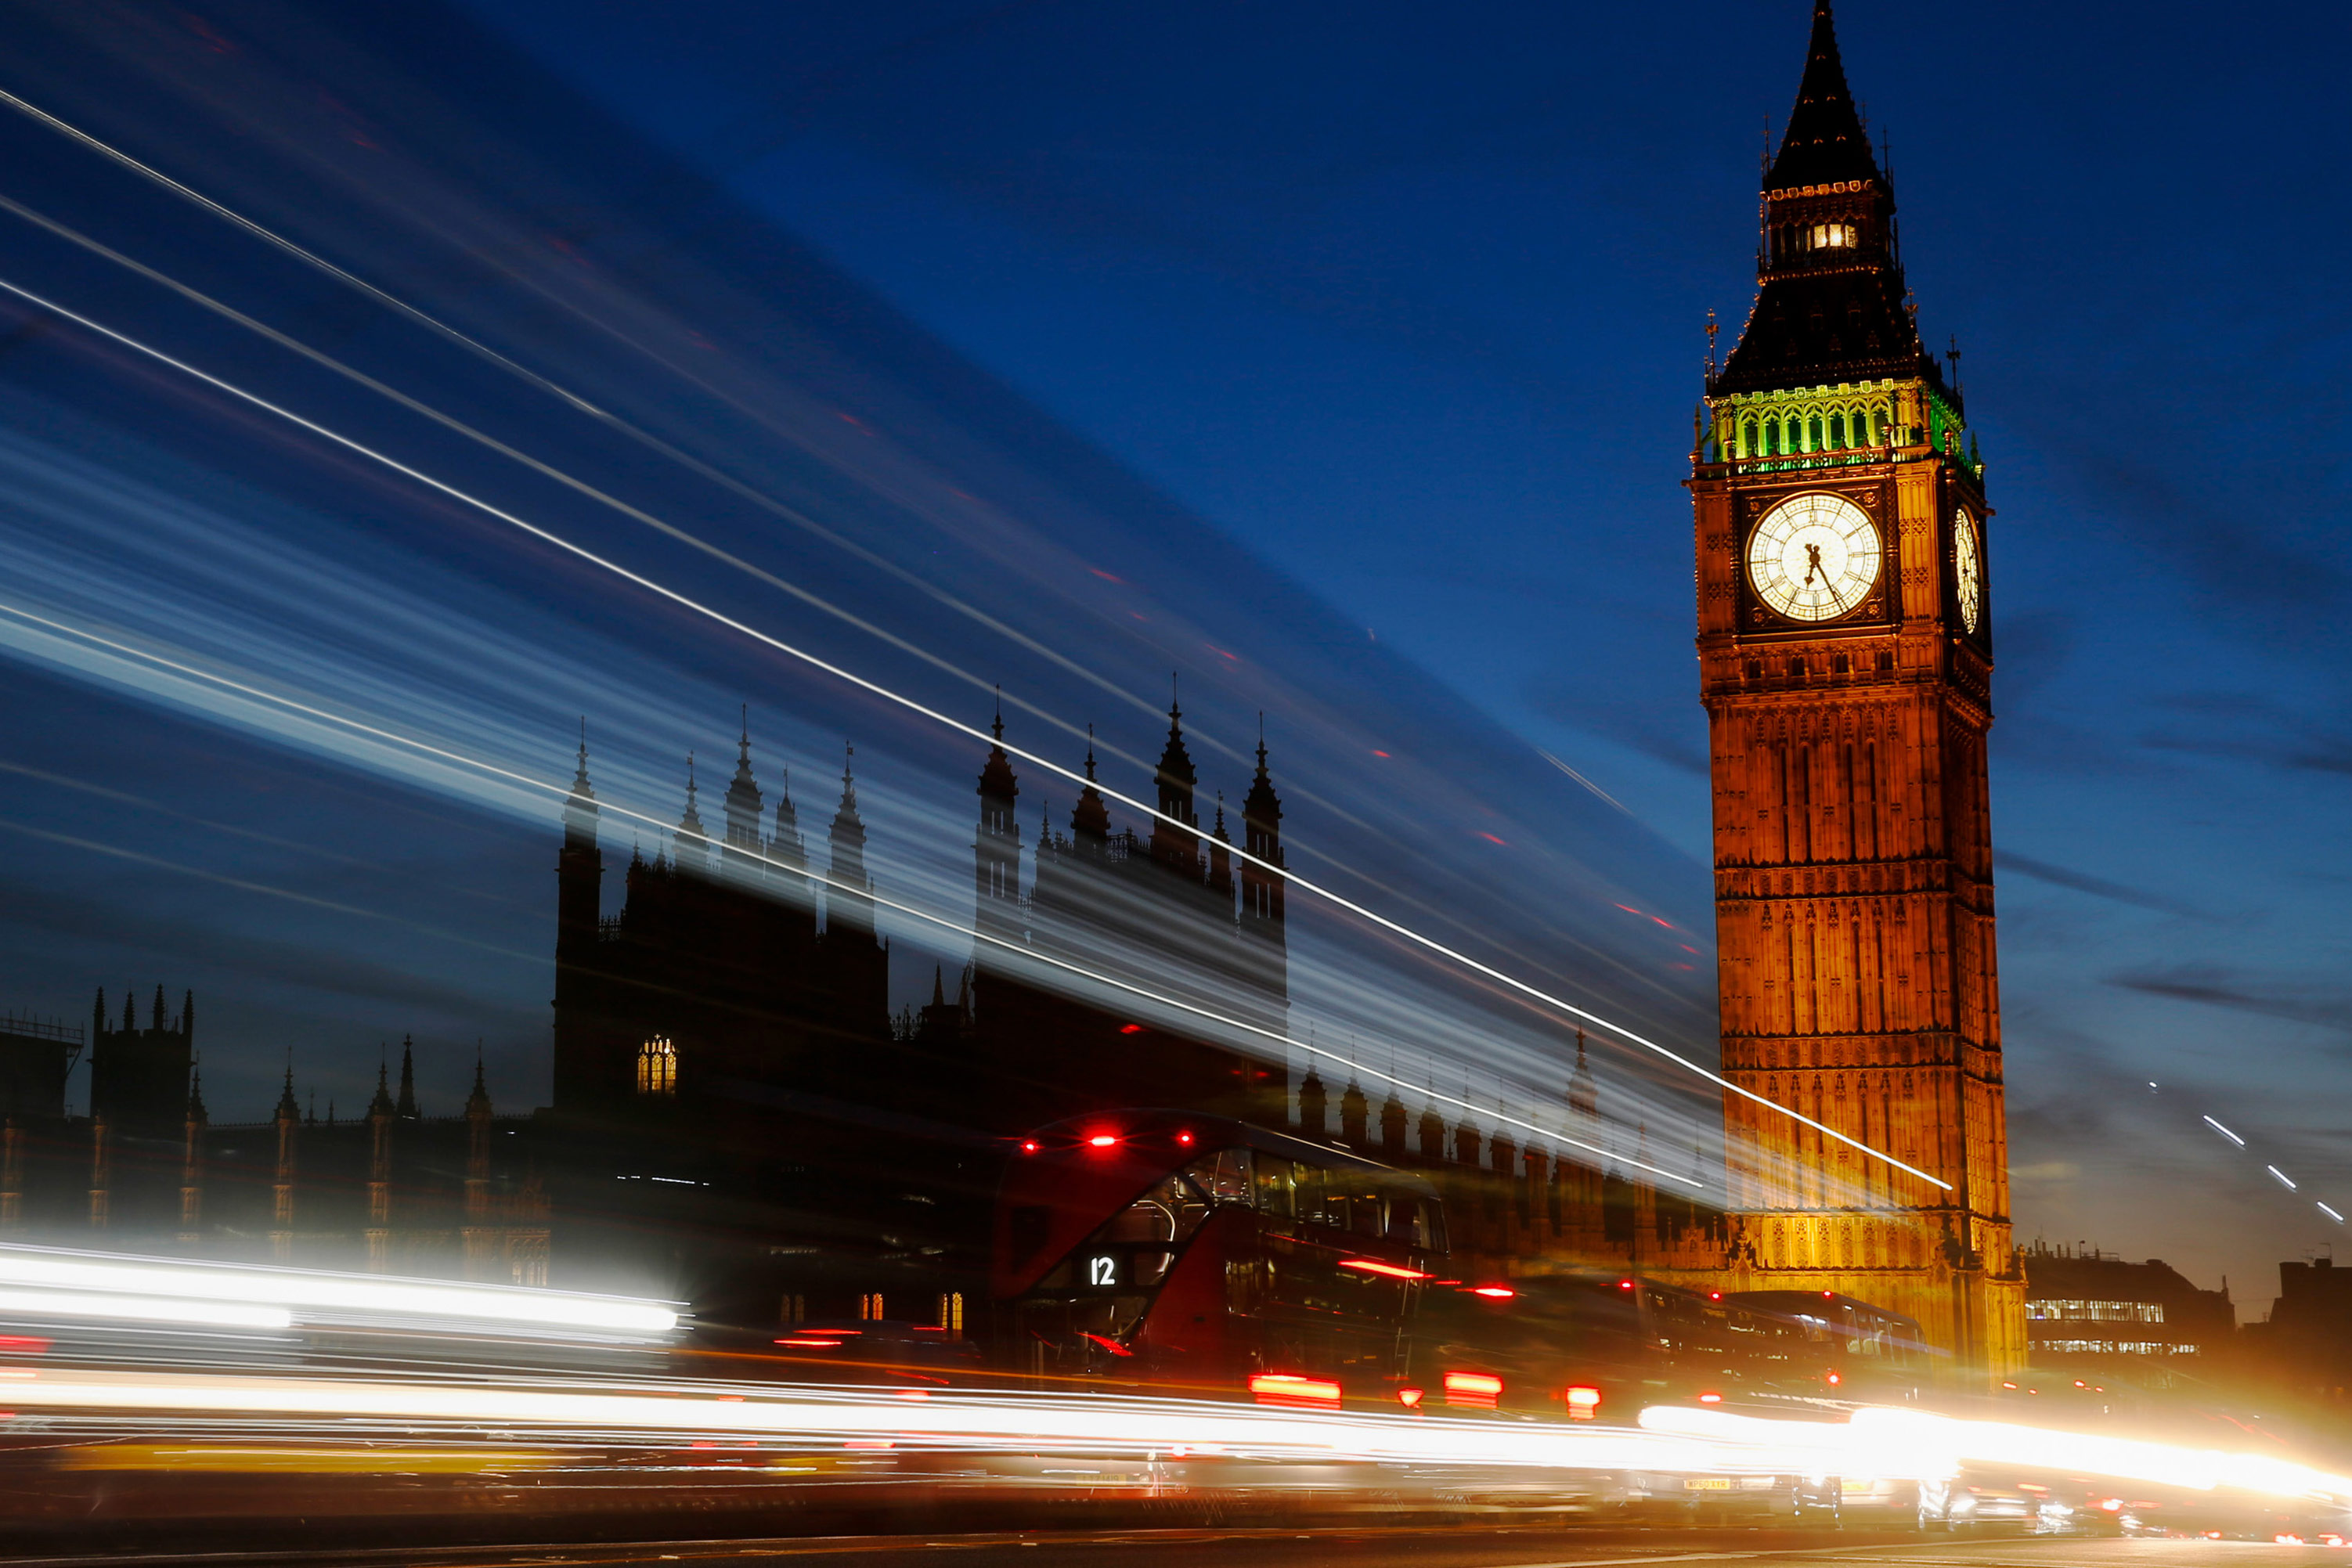 Время в лондоне и москве. Часовая башня Биг Бен. Биг-Бен (башня Елизаветы). Англия часы Биг Бен. Лондонская башня Биг Бен.